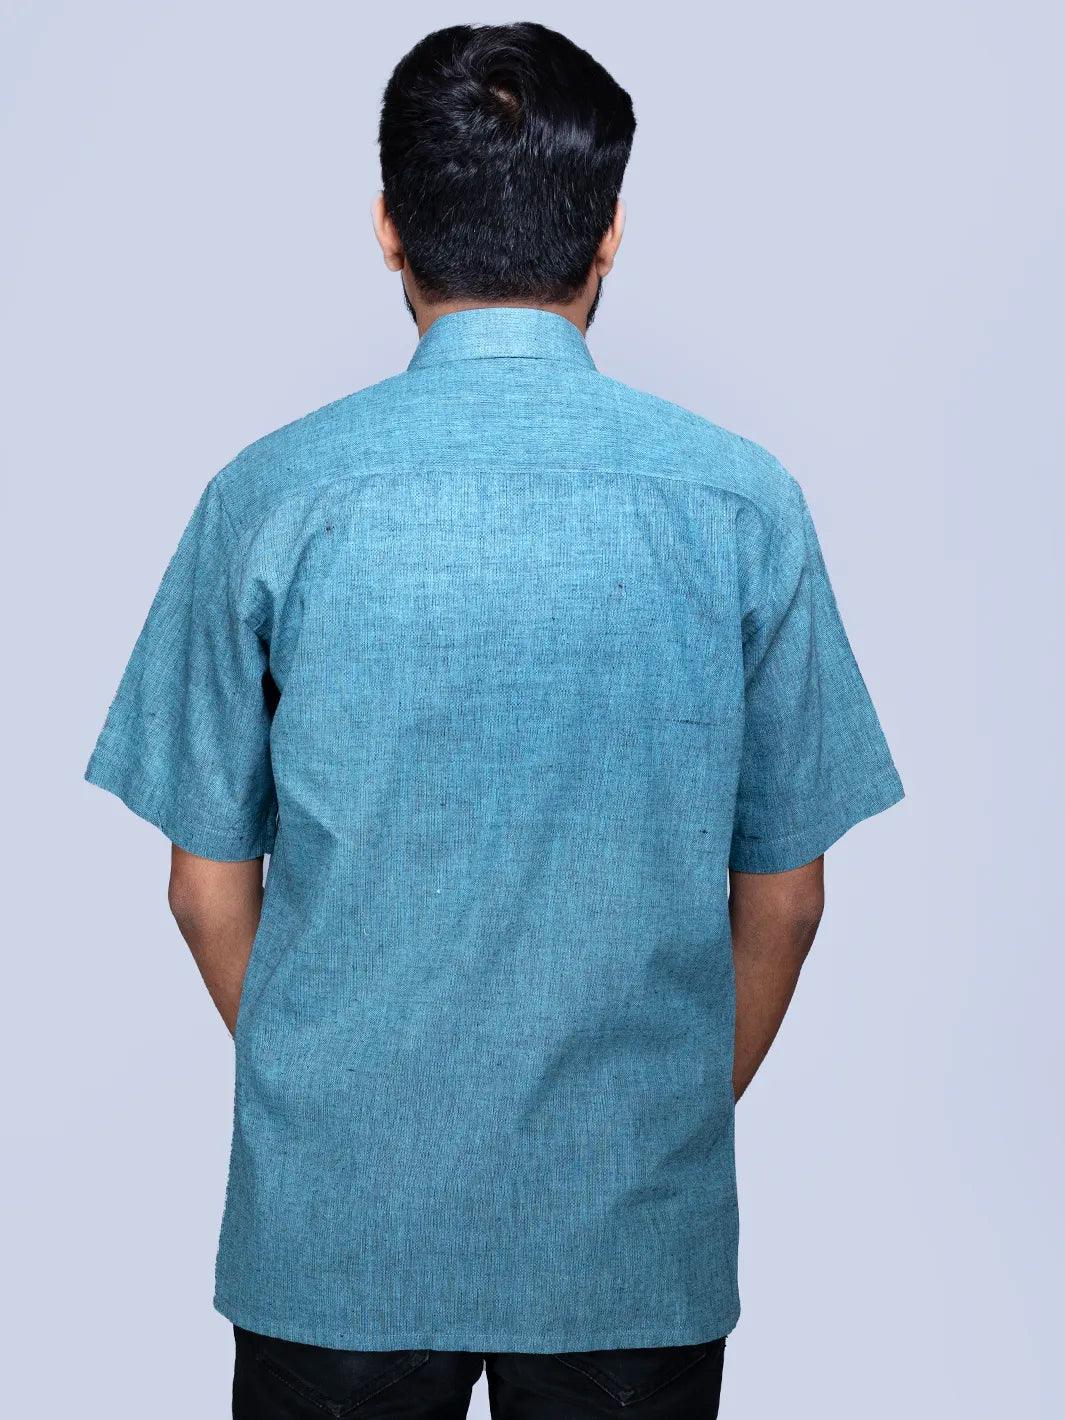 Sky Blue Black Dual Tone Handwoven Organic Cotton Formal Men Shirt - WeaversIndia